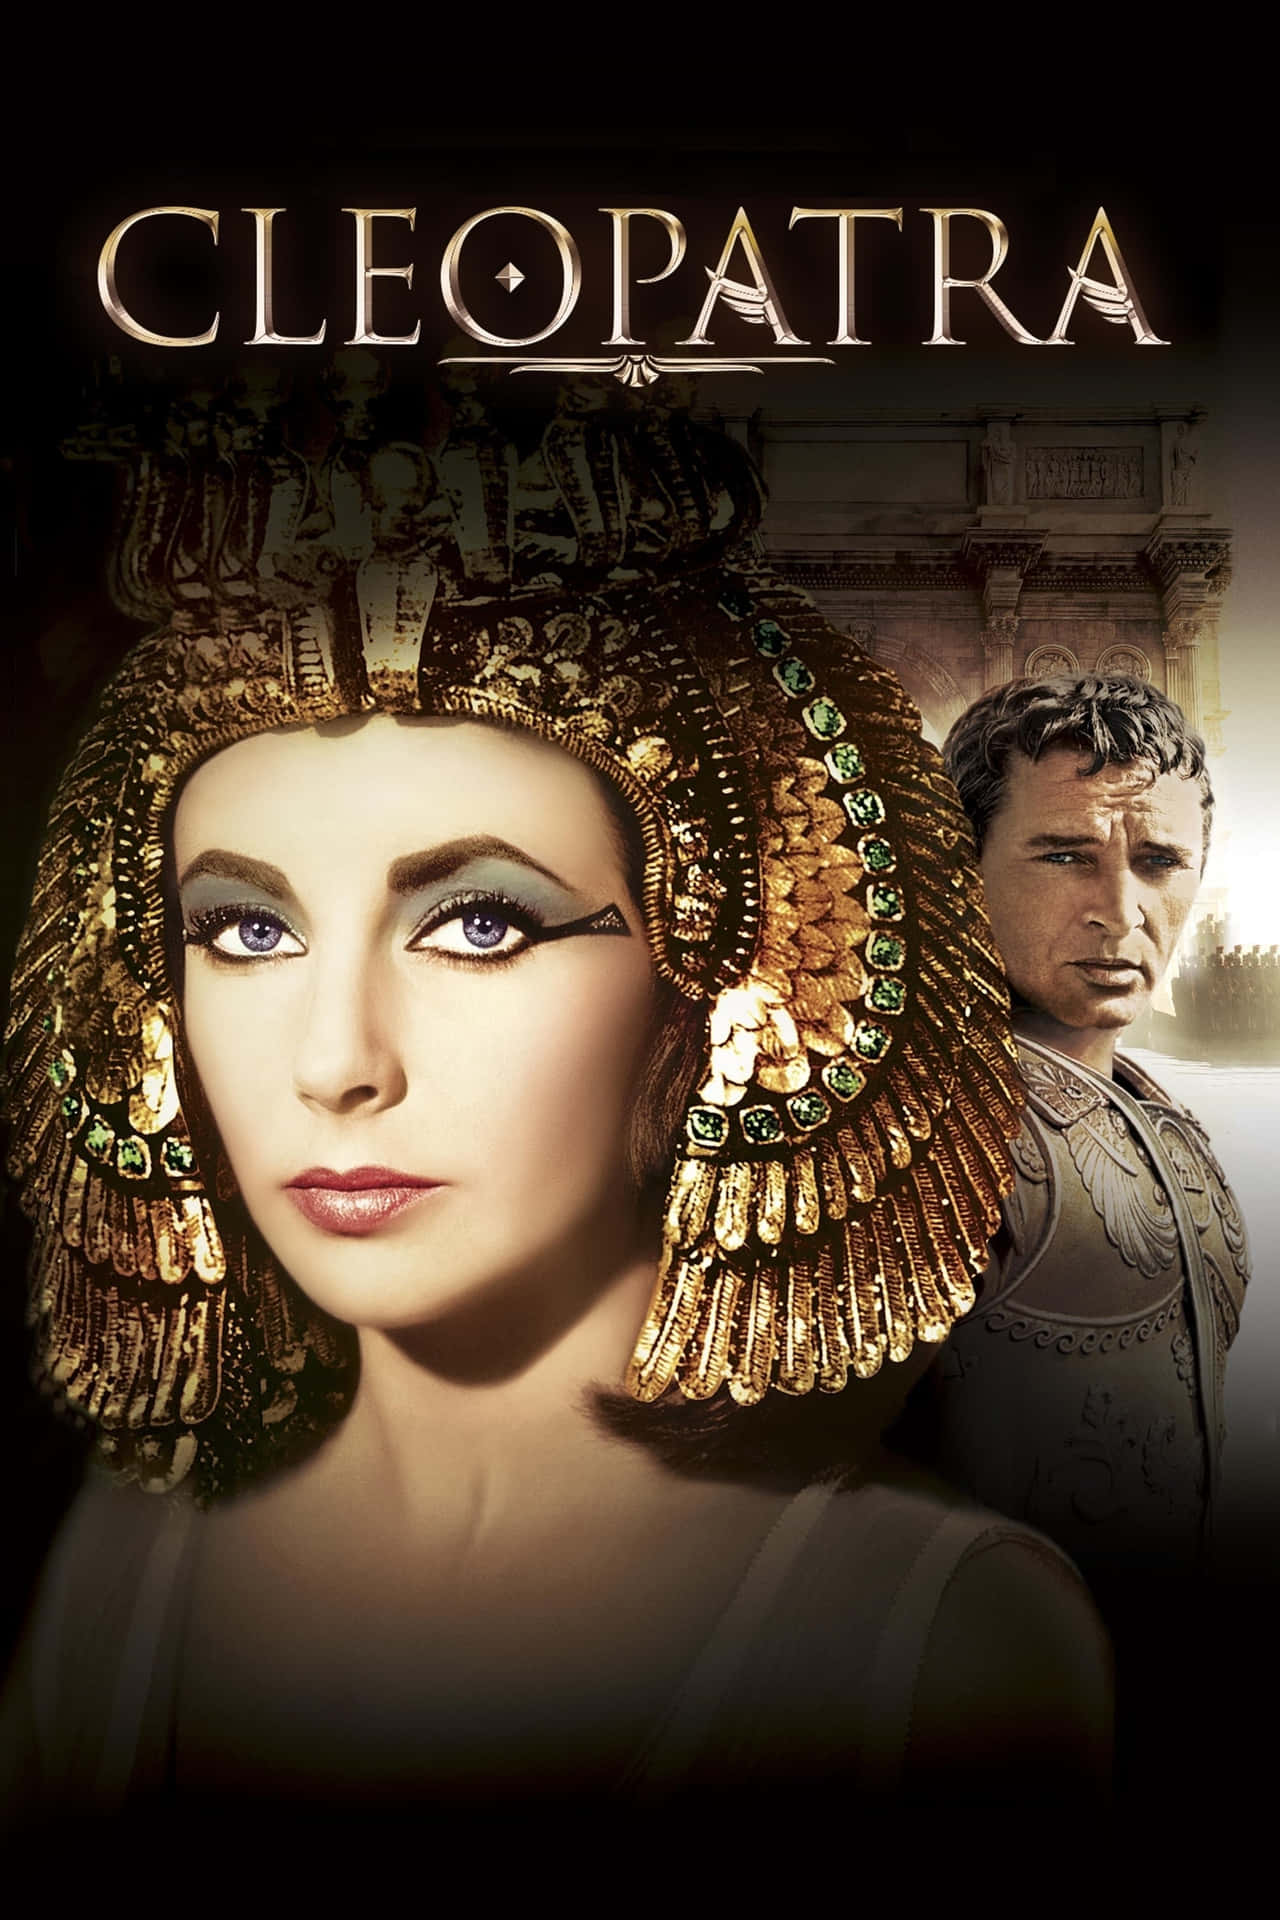 A portrait of legendary Egyptian ruler Cleopatra